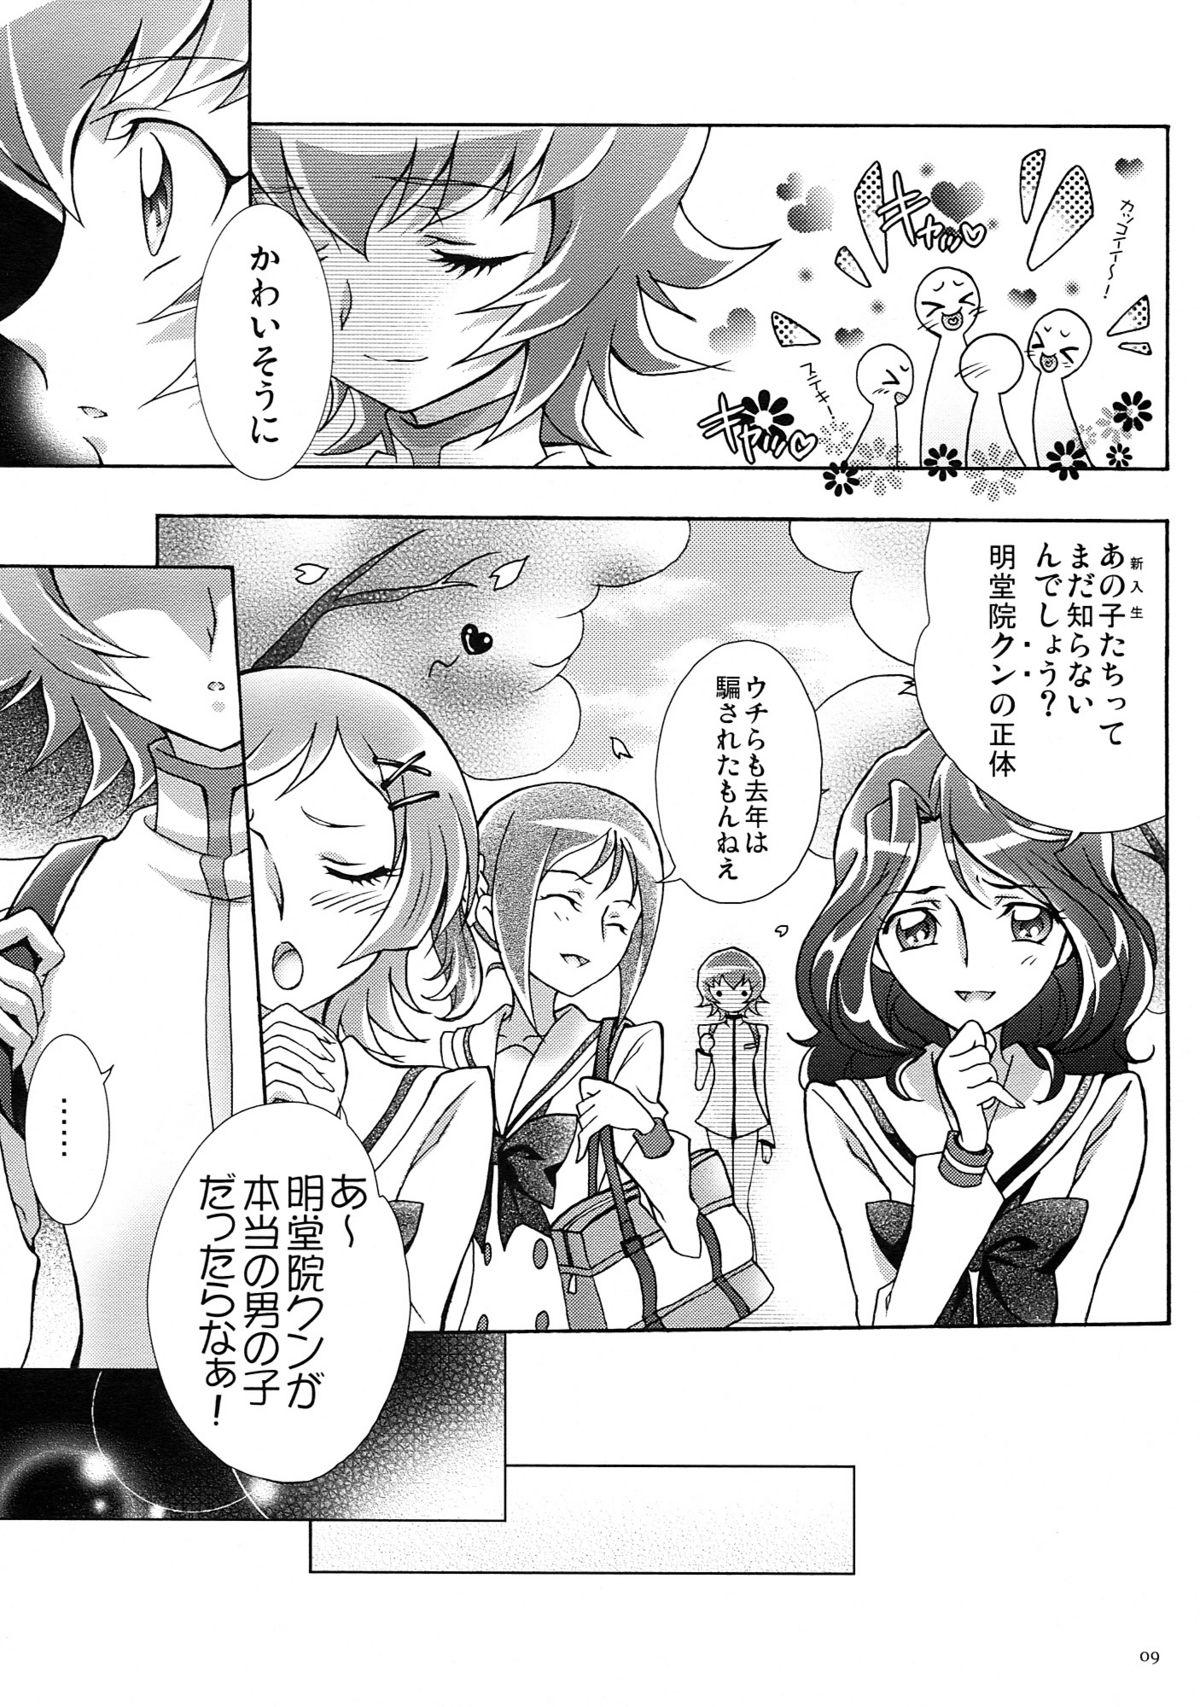 Hermosa Itsuki 1 - Heartcatch precure Room - Page 9